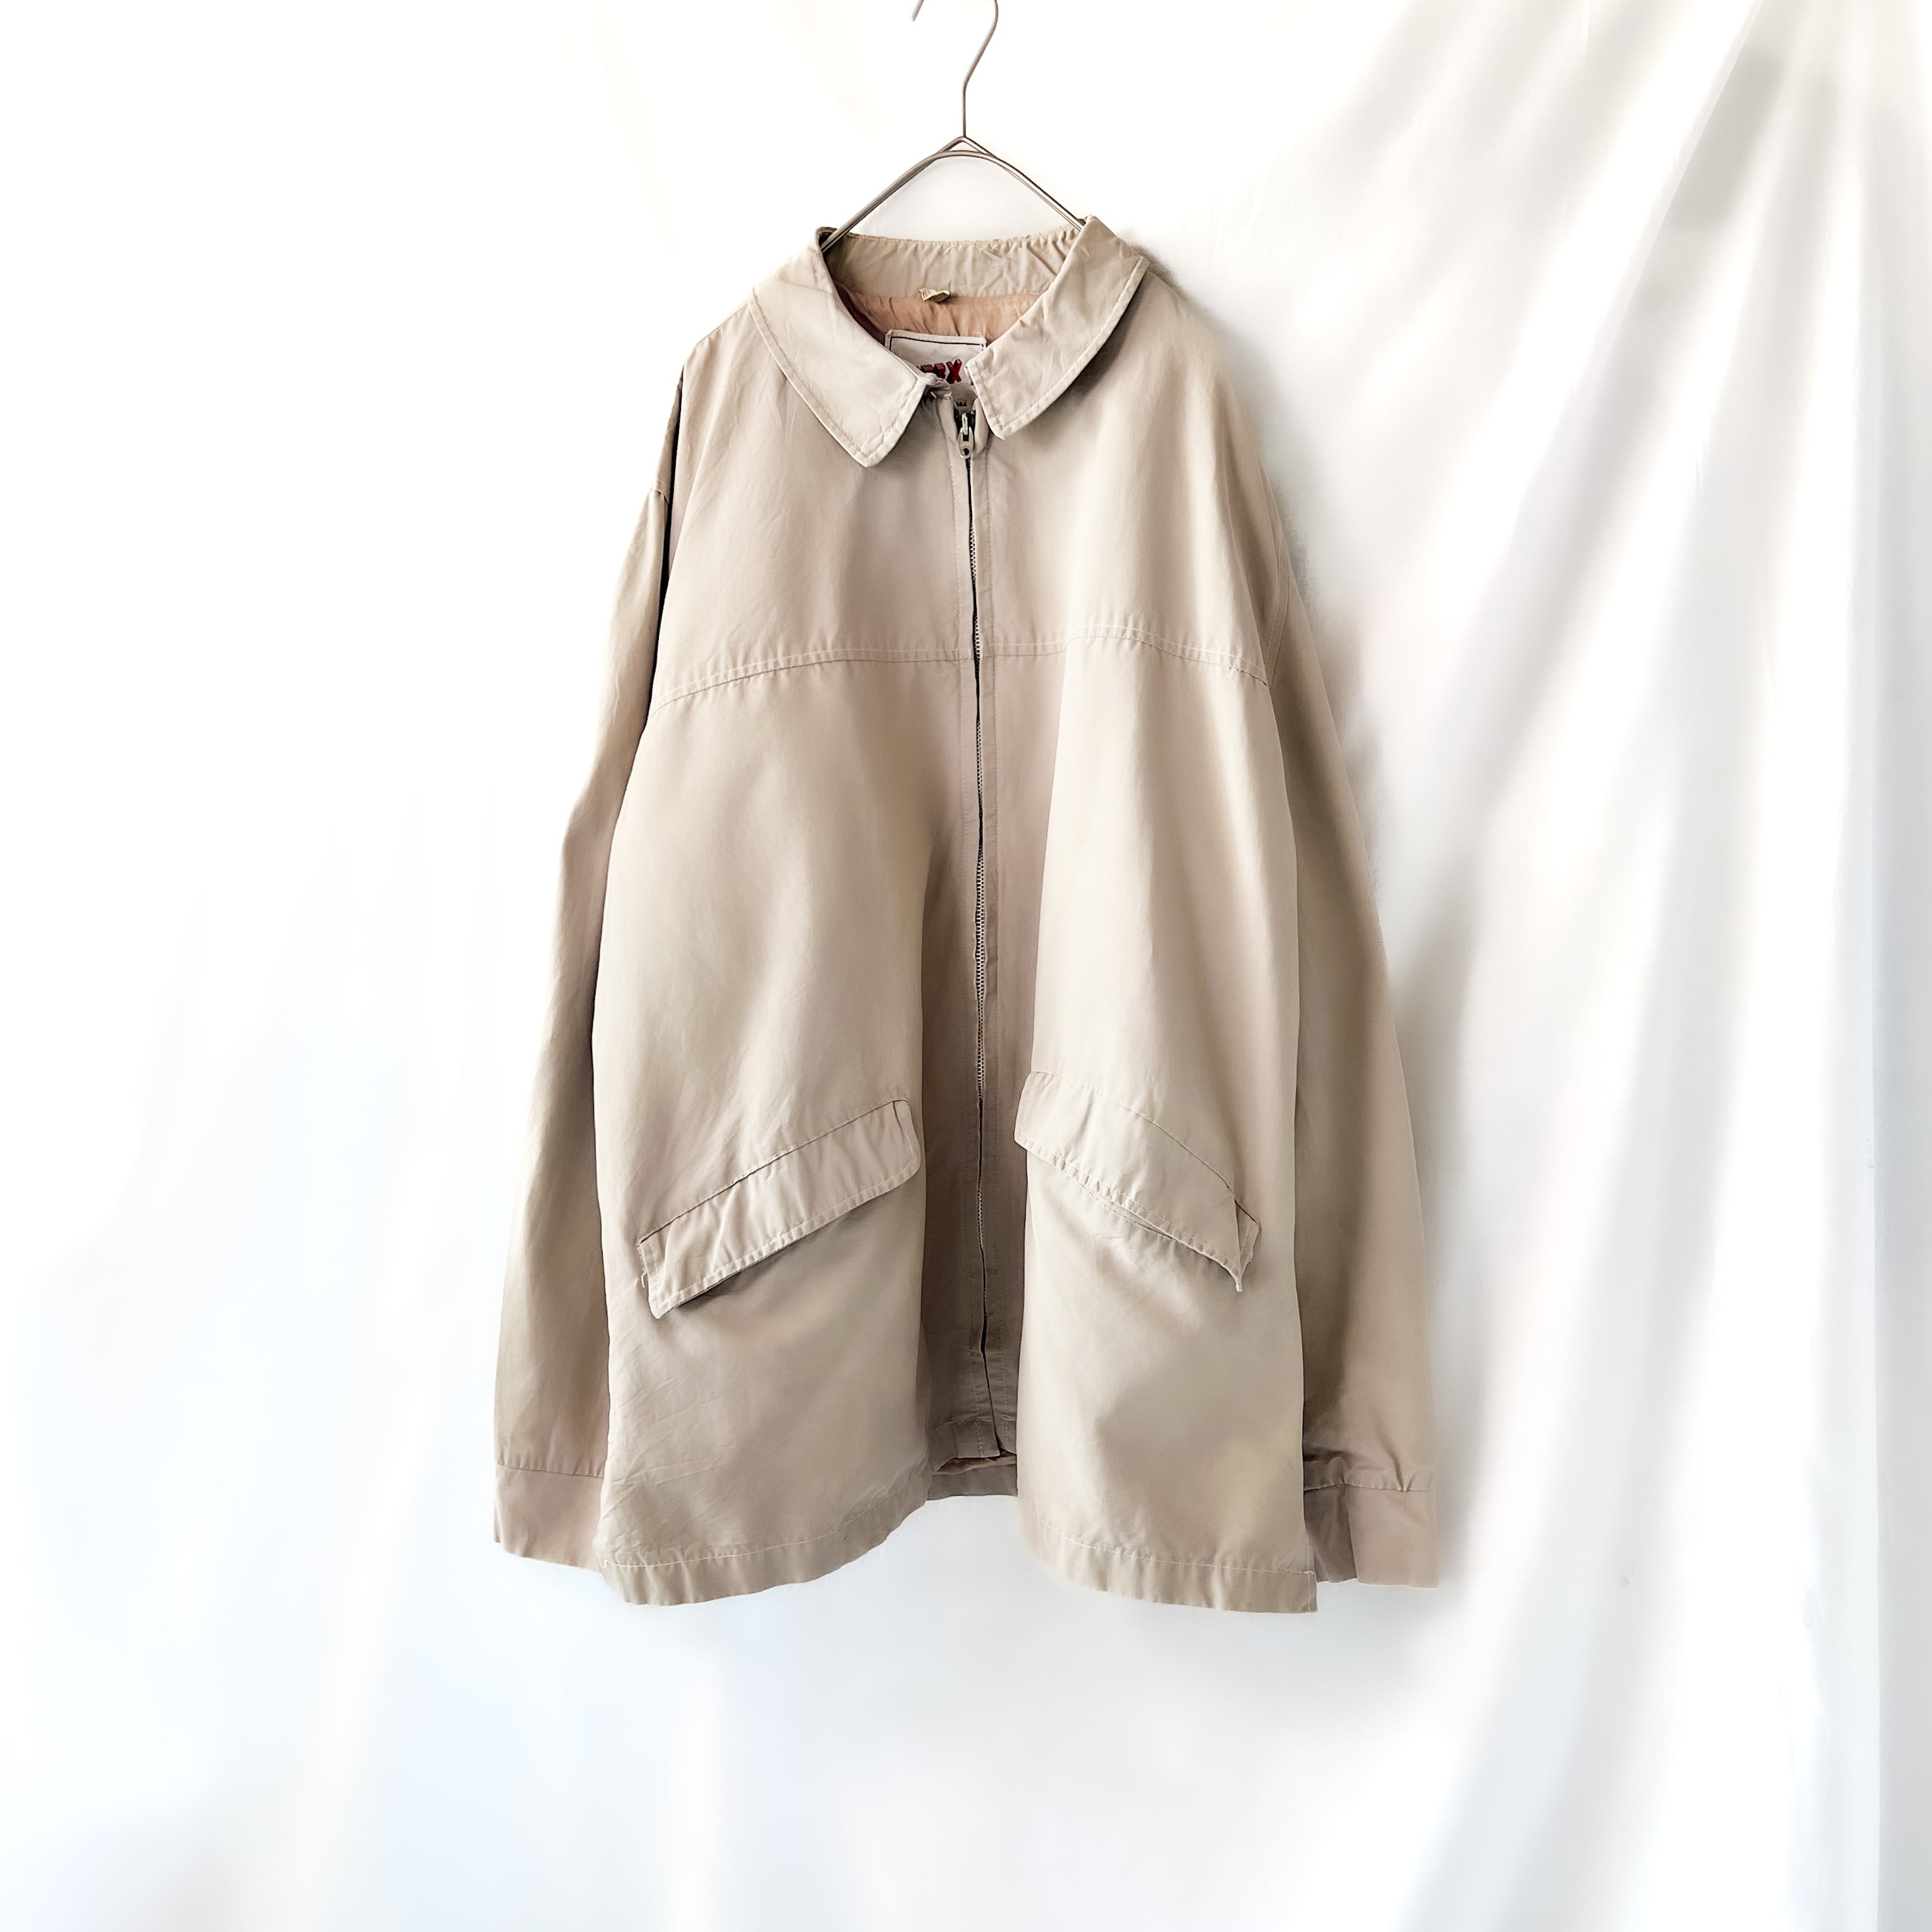 about 60s “UTEX” harrington jacket Lightning zip made in canada 